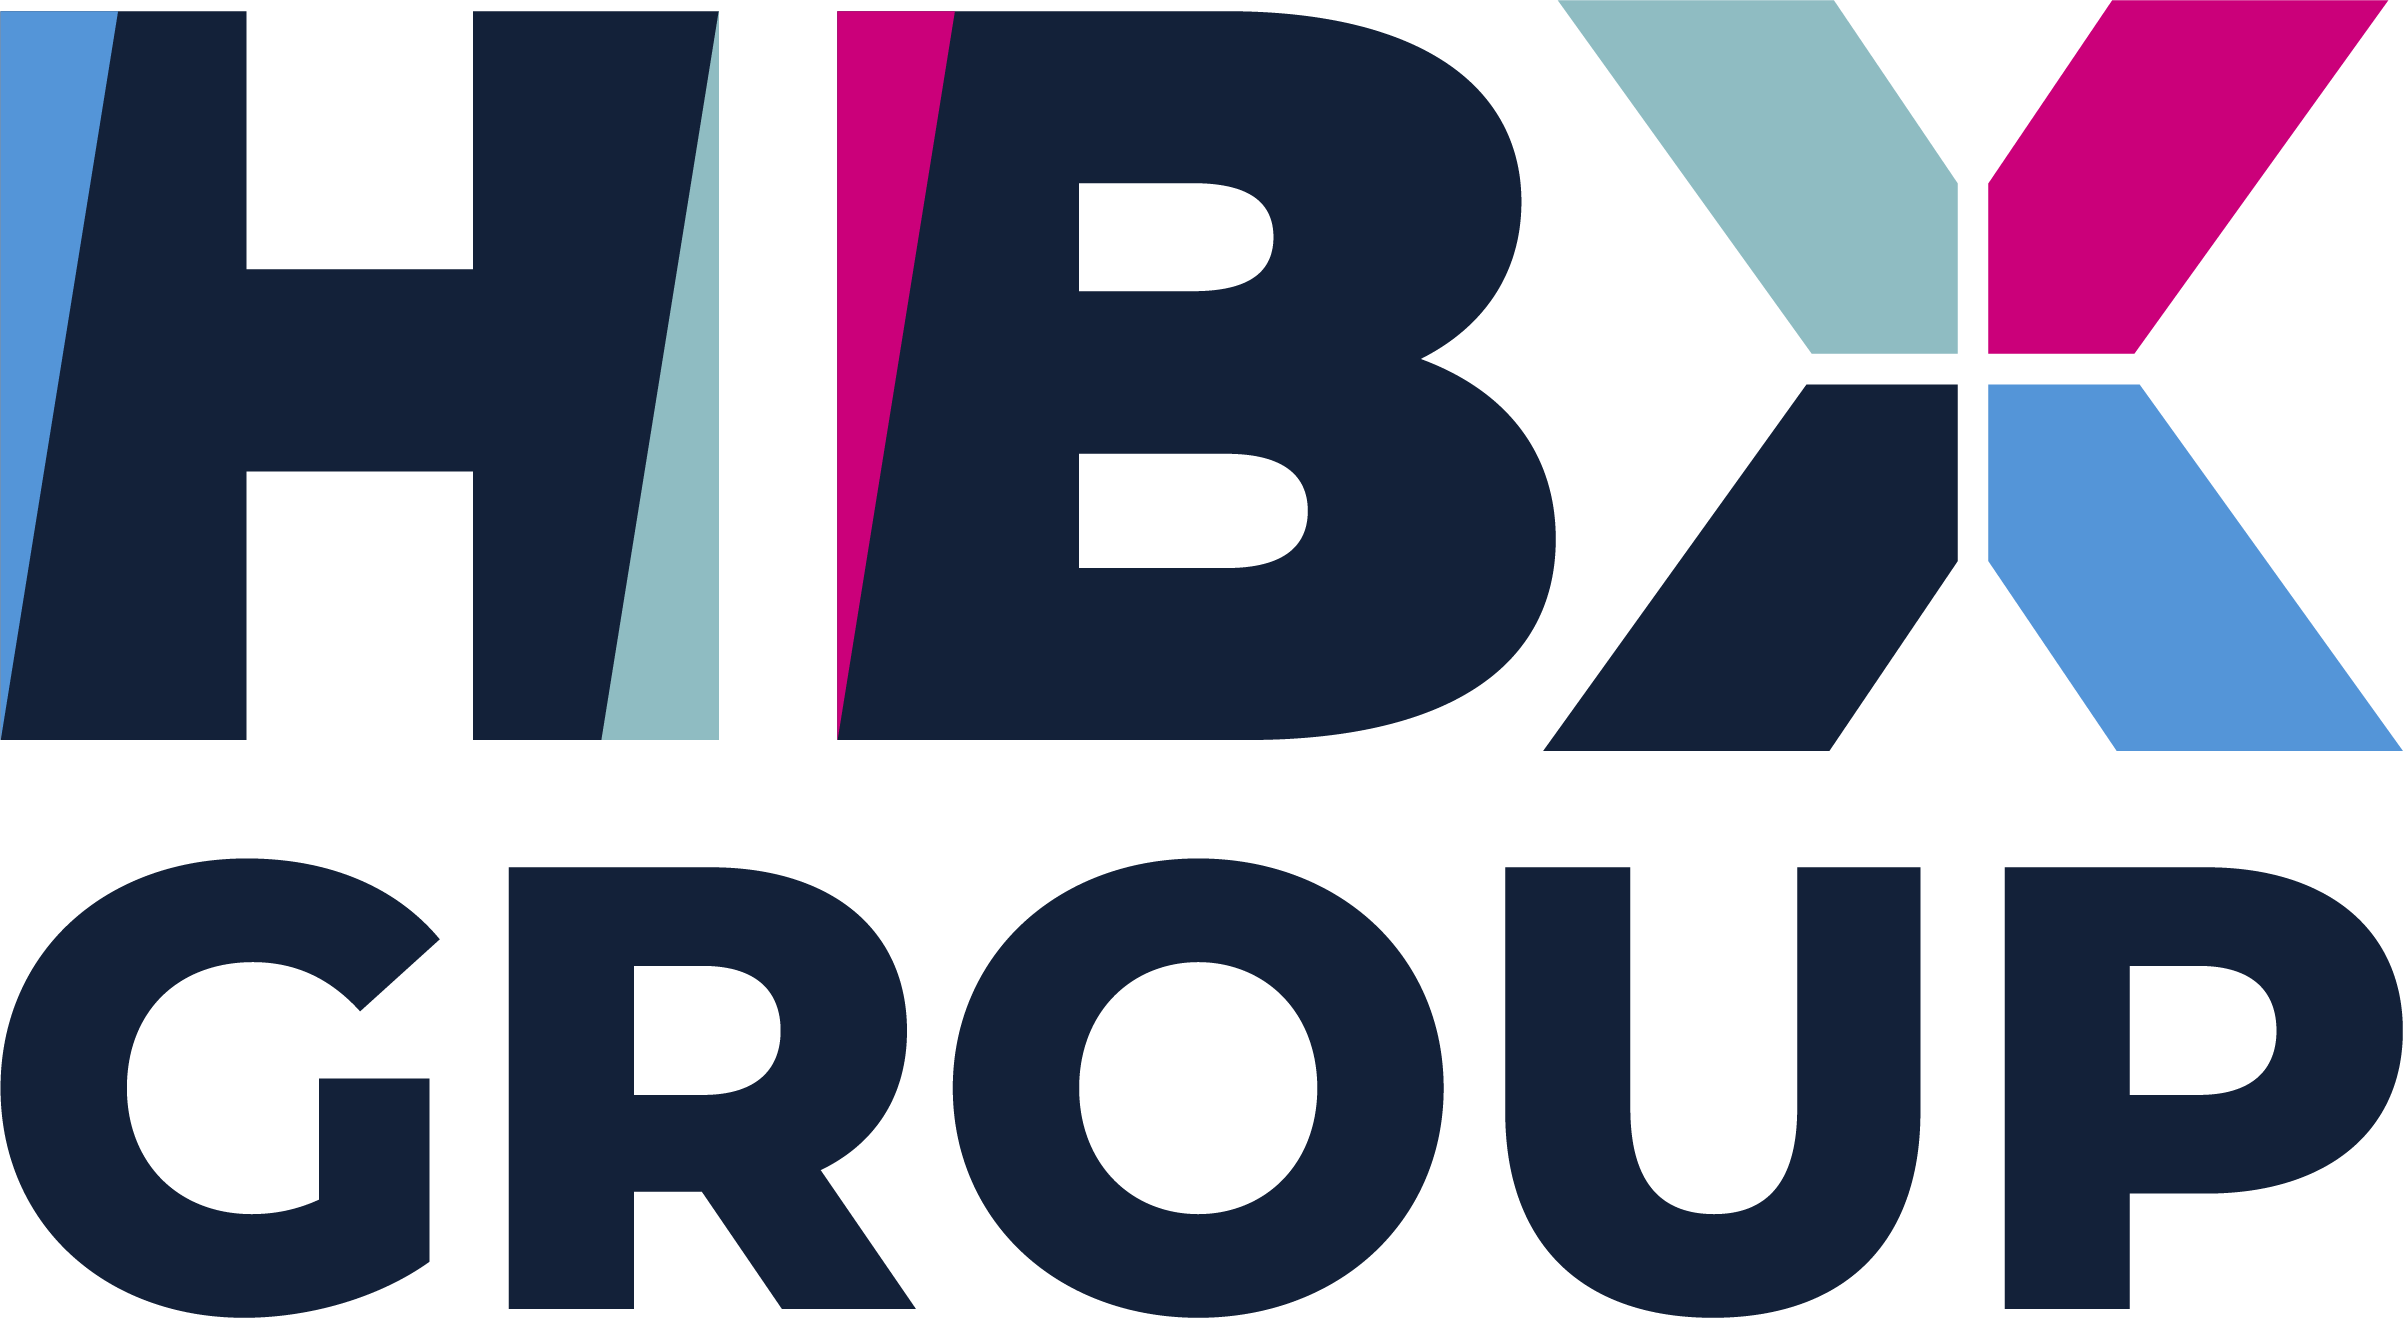 HBX Group Logo